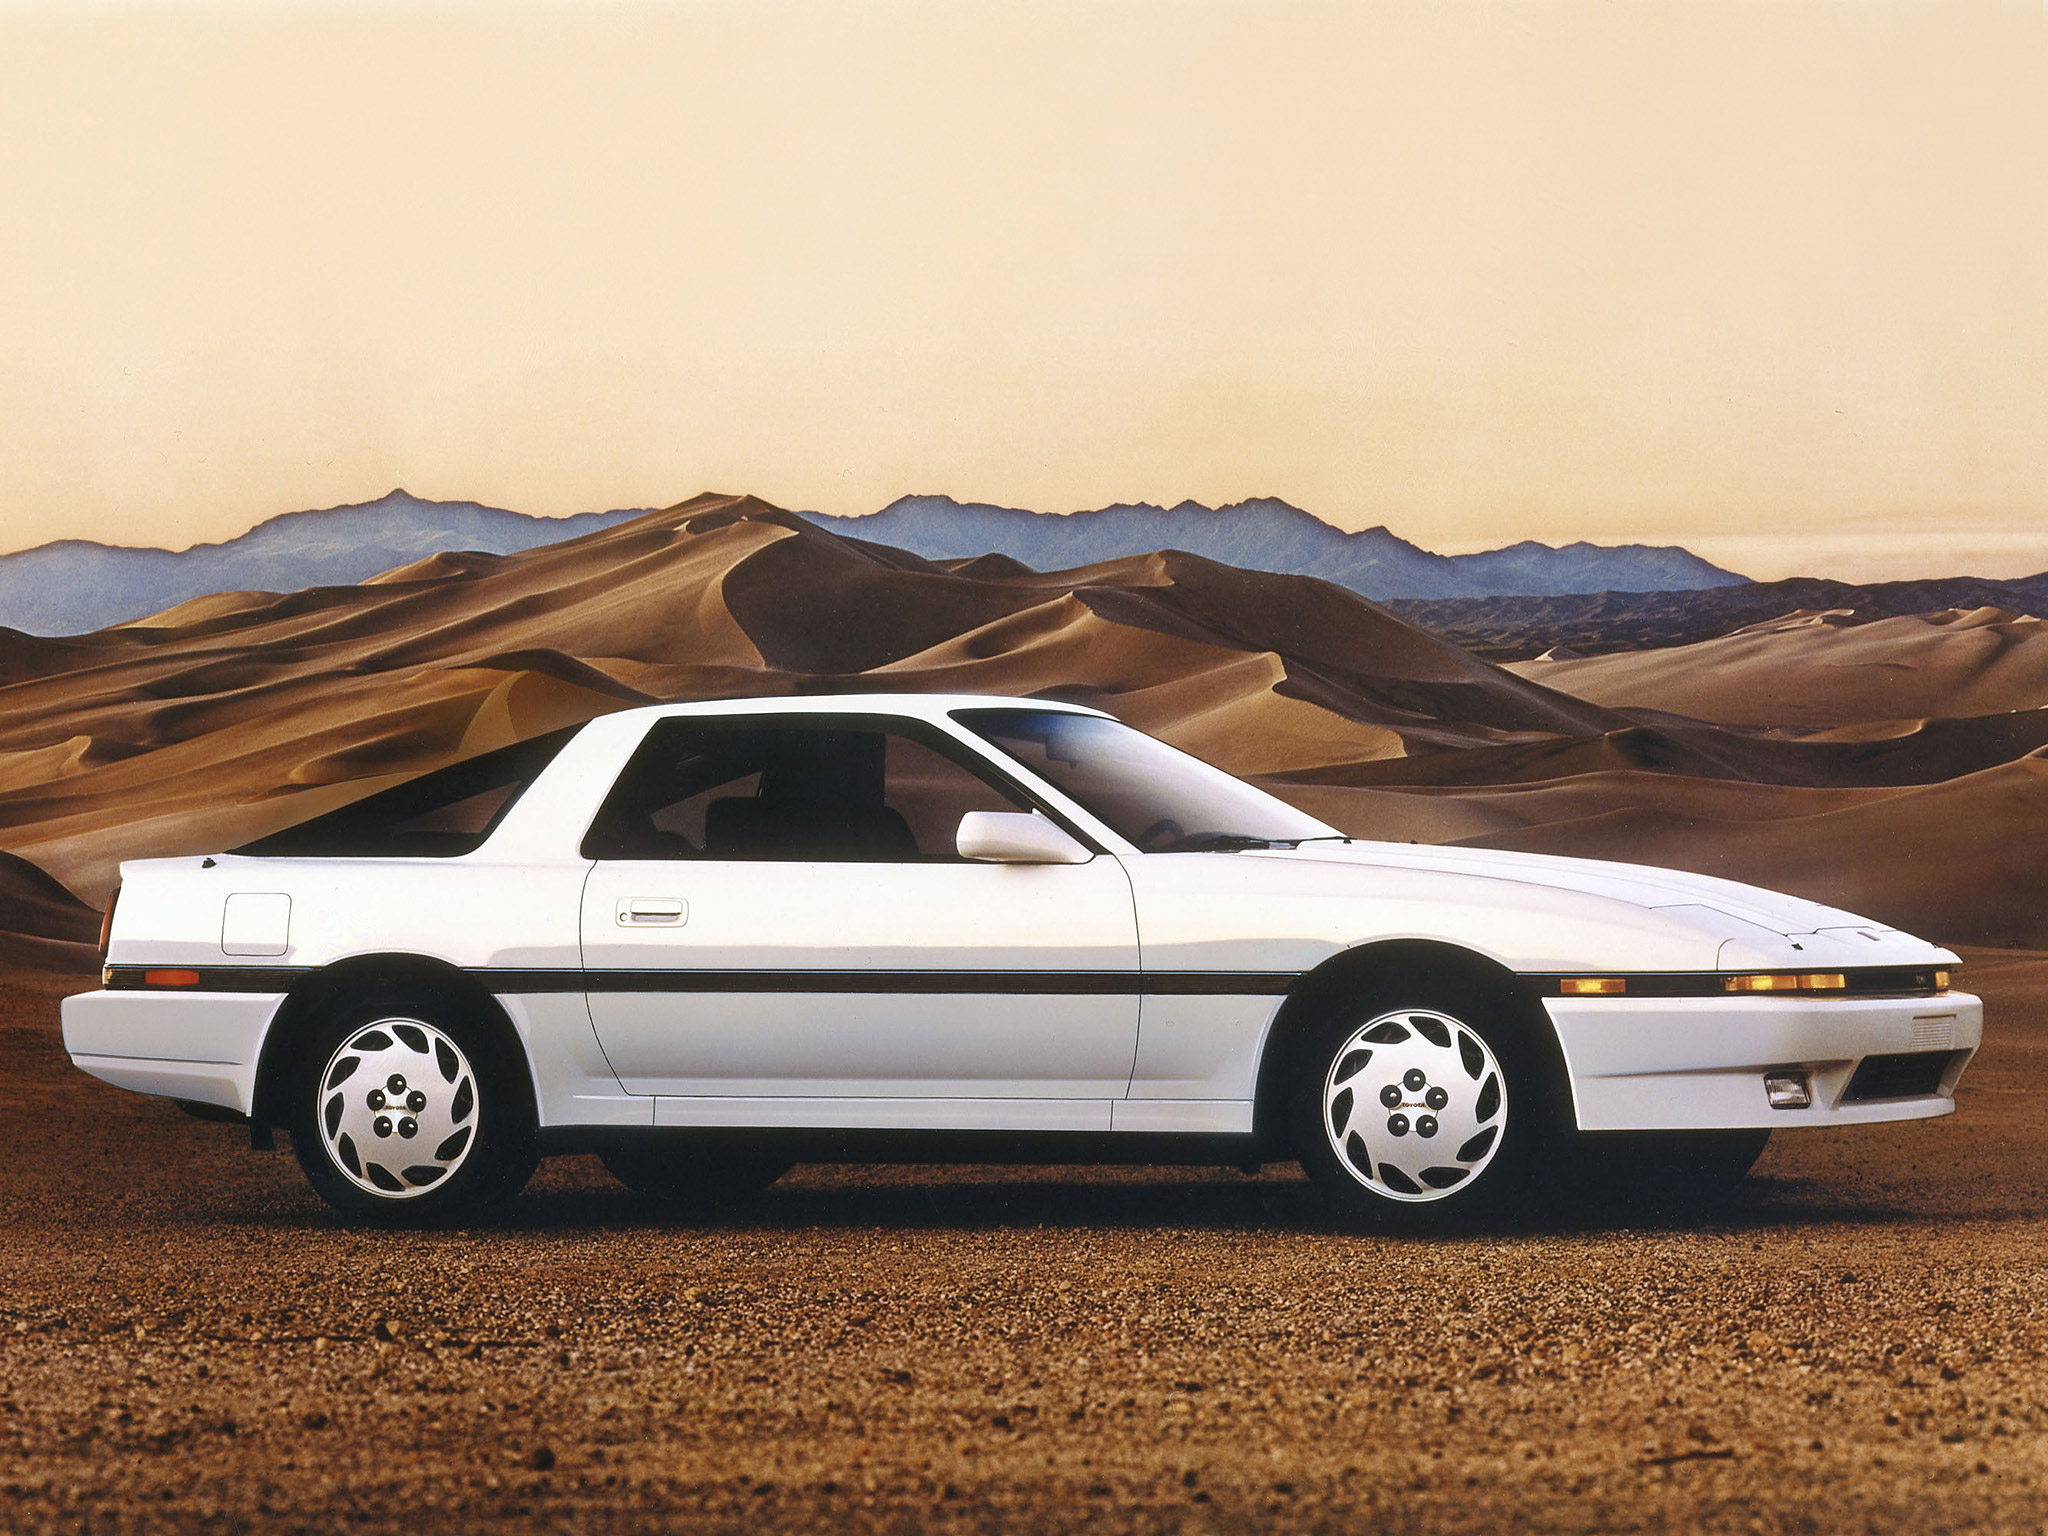  1987 Toyota Supra Wallpaper.